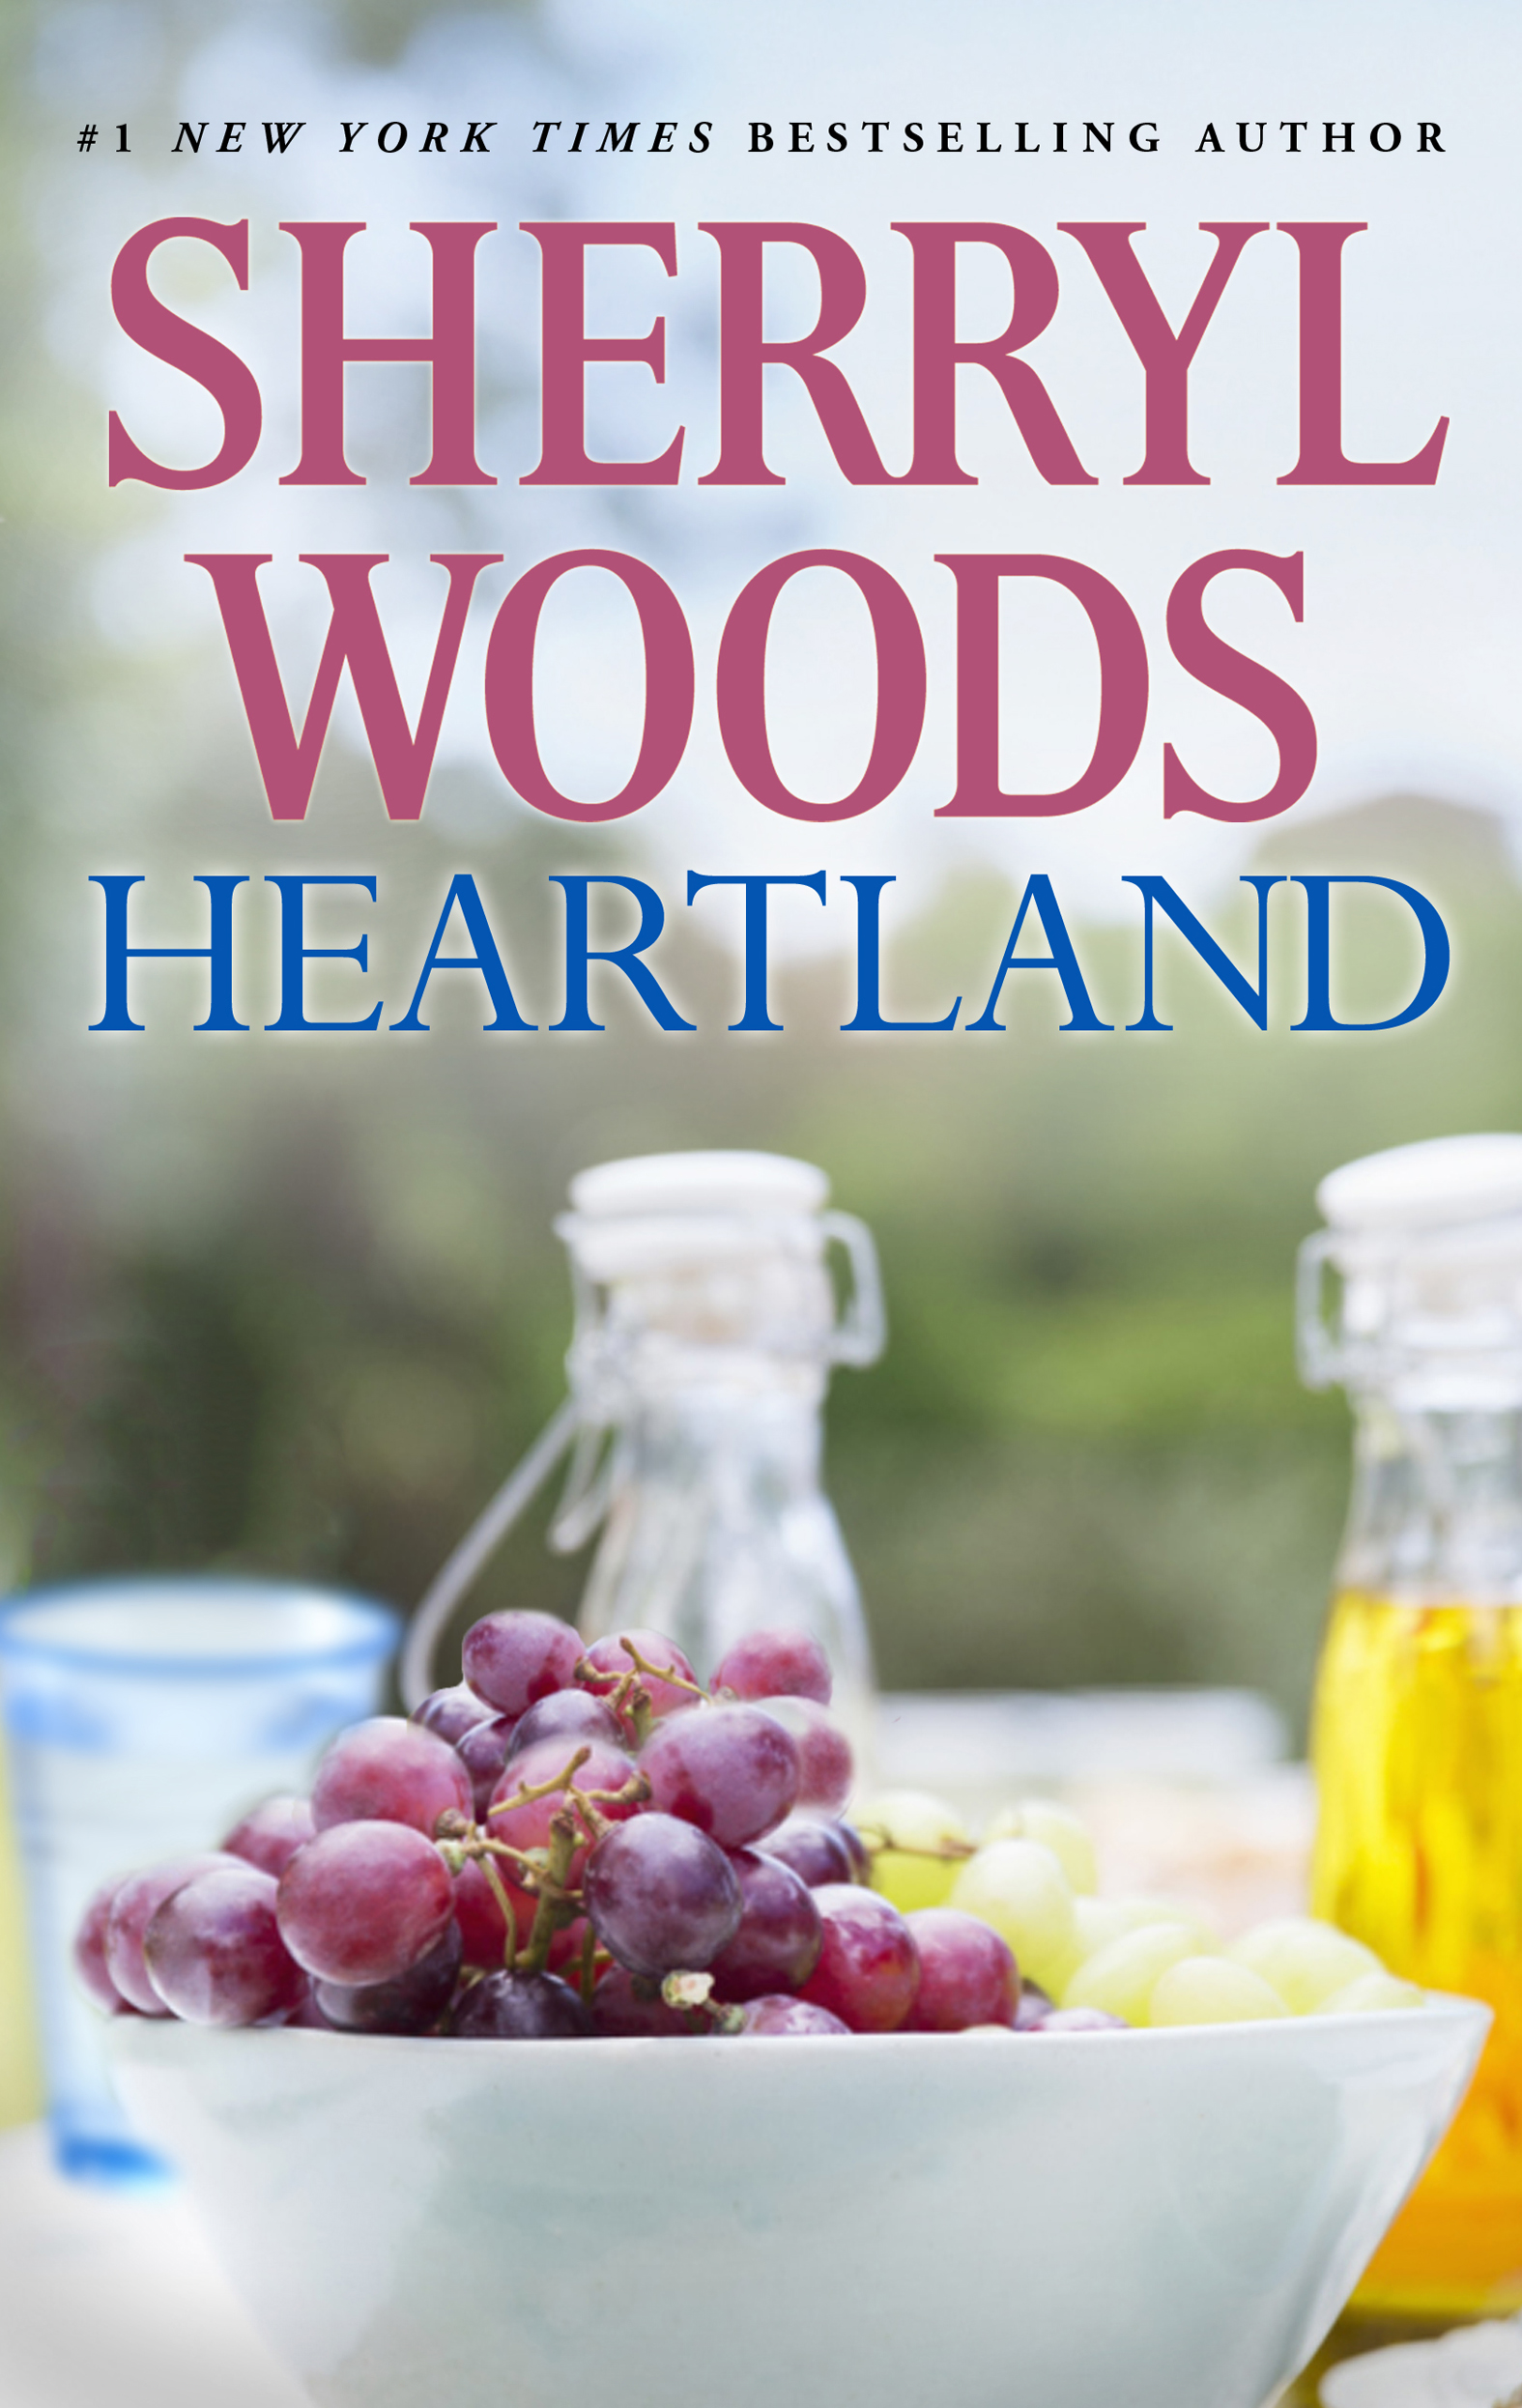 Heartland (2016) by Sherryl Woods